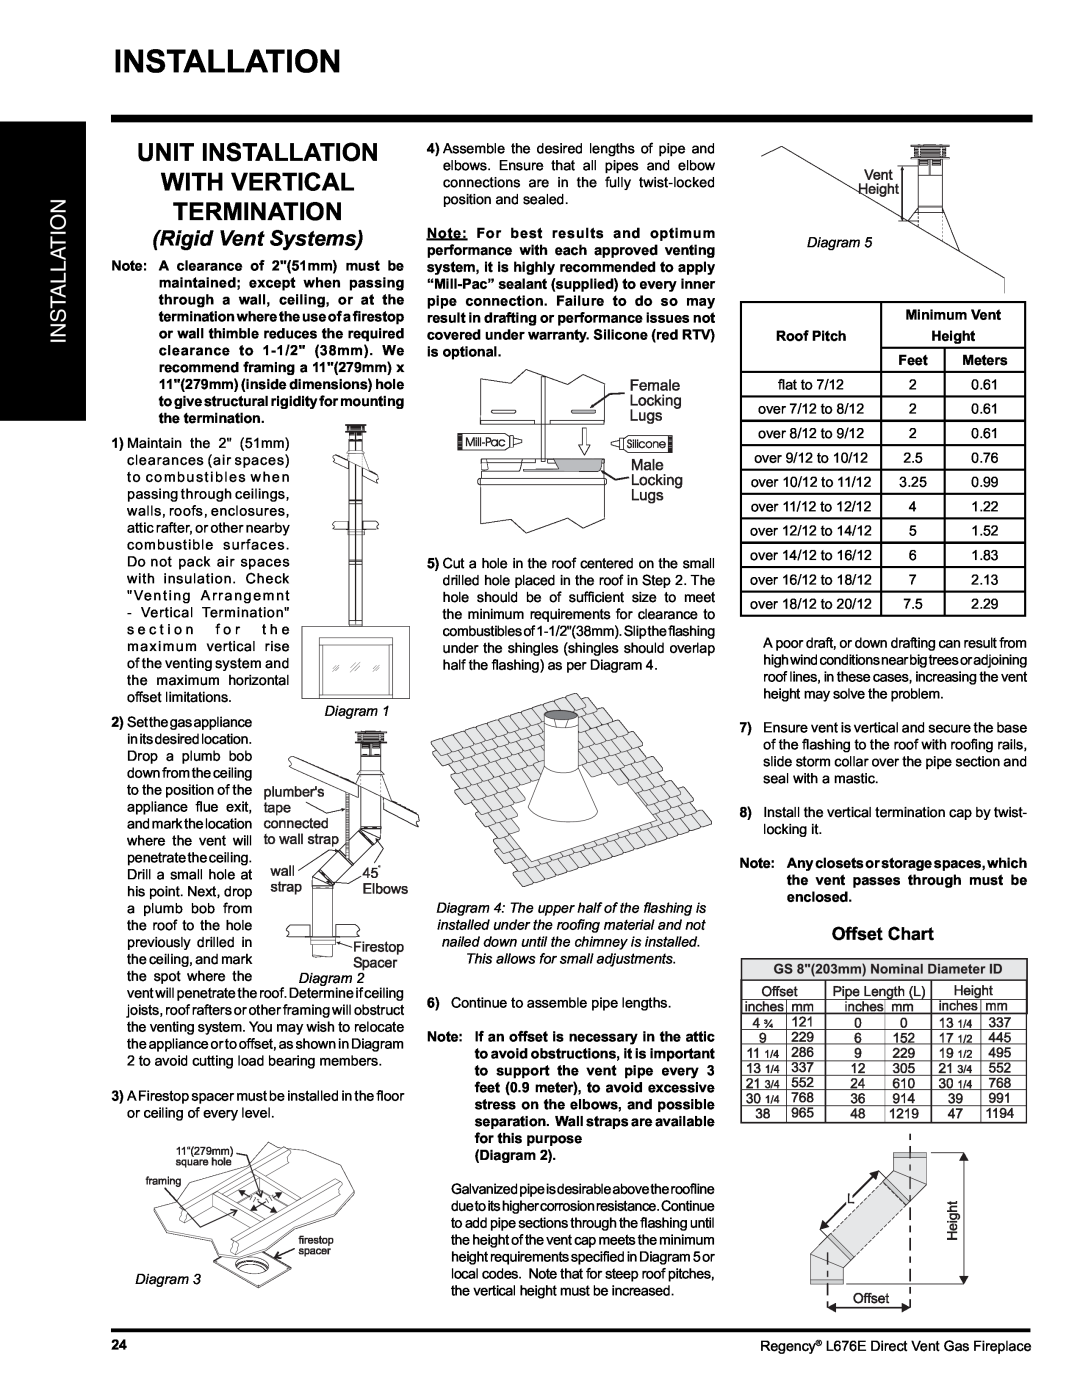 Regency L676E-LP Unit Installation With Vertical Termination, Rigid Vent Systems, Diagram, Minimum Vent, Feet 